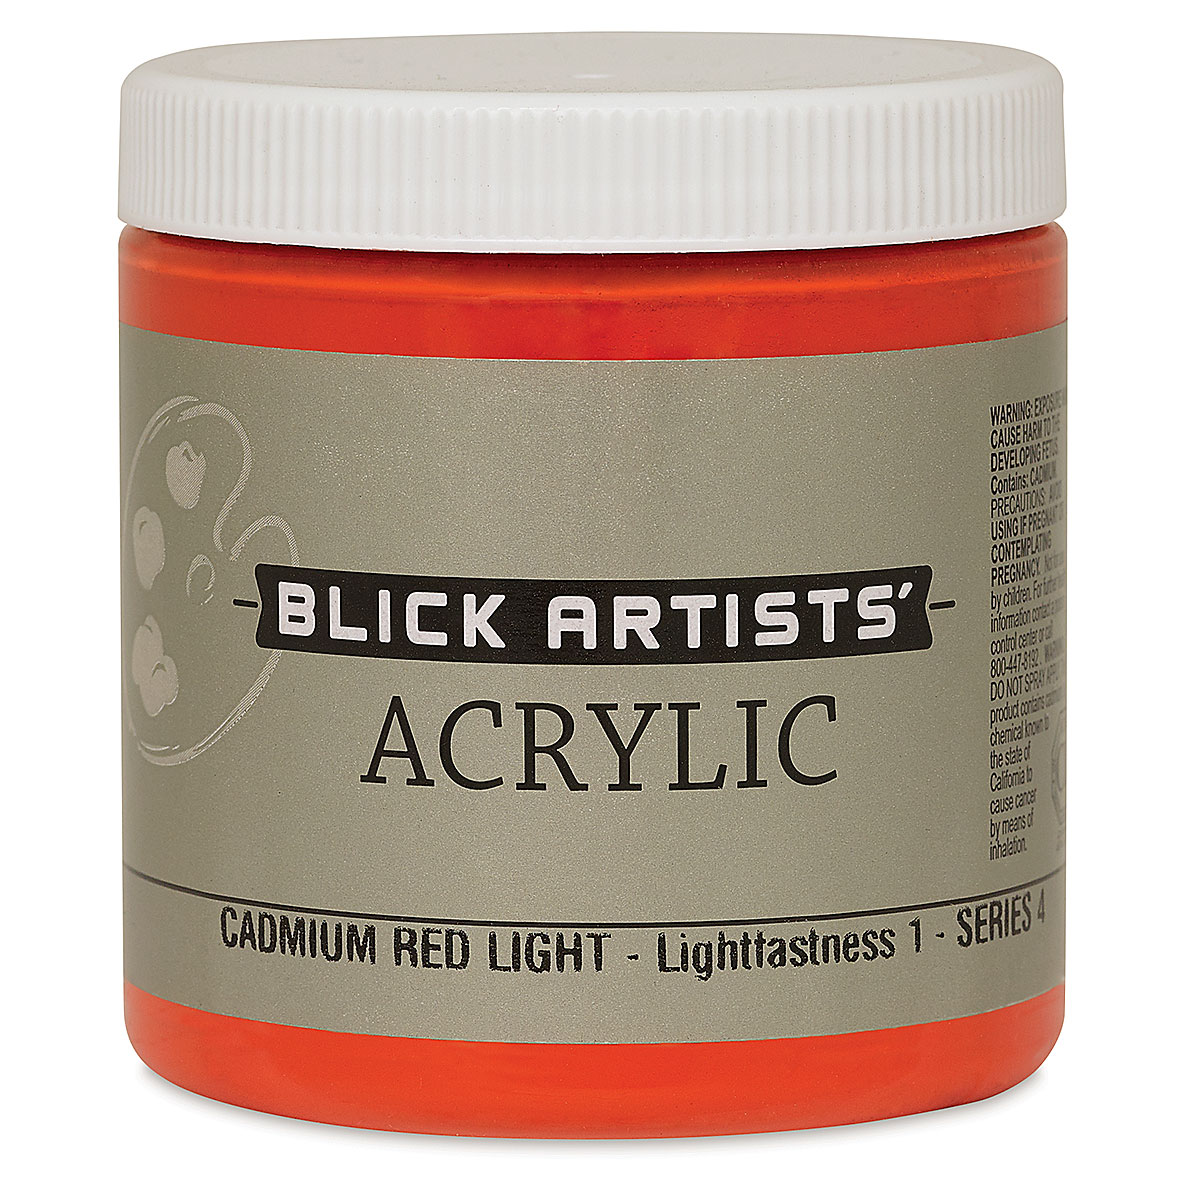 Blick Artists' Acrylic - Cadmium Red Light, 8 oz jar